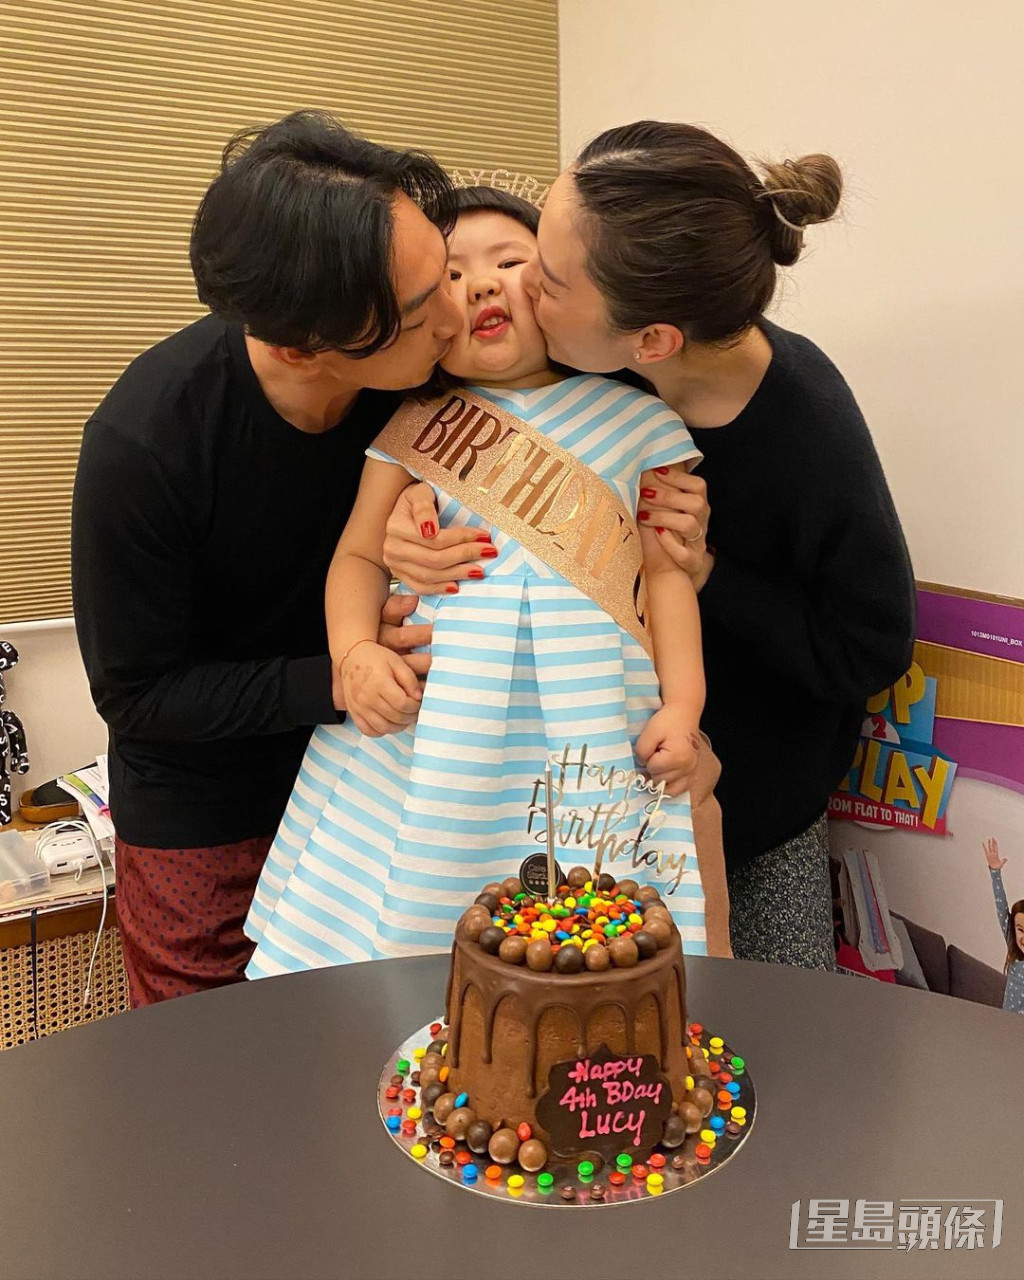 Lucy到去年庆祝4岁生日，终于有王冠、彩带、蛋糕及birthday kiss。  ​